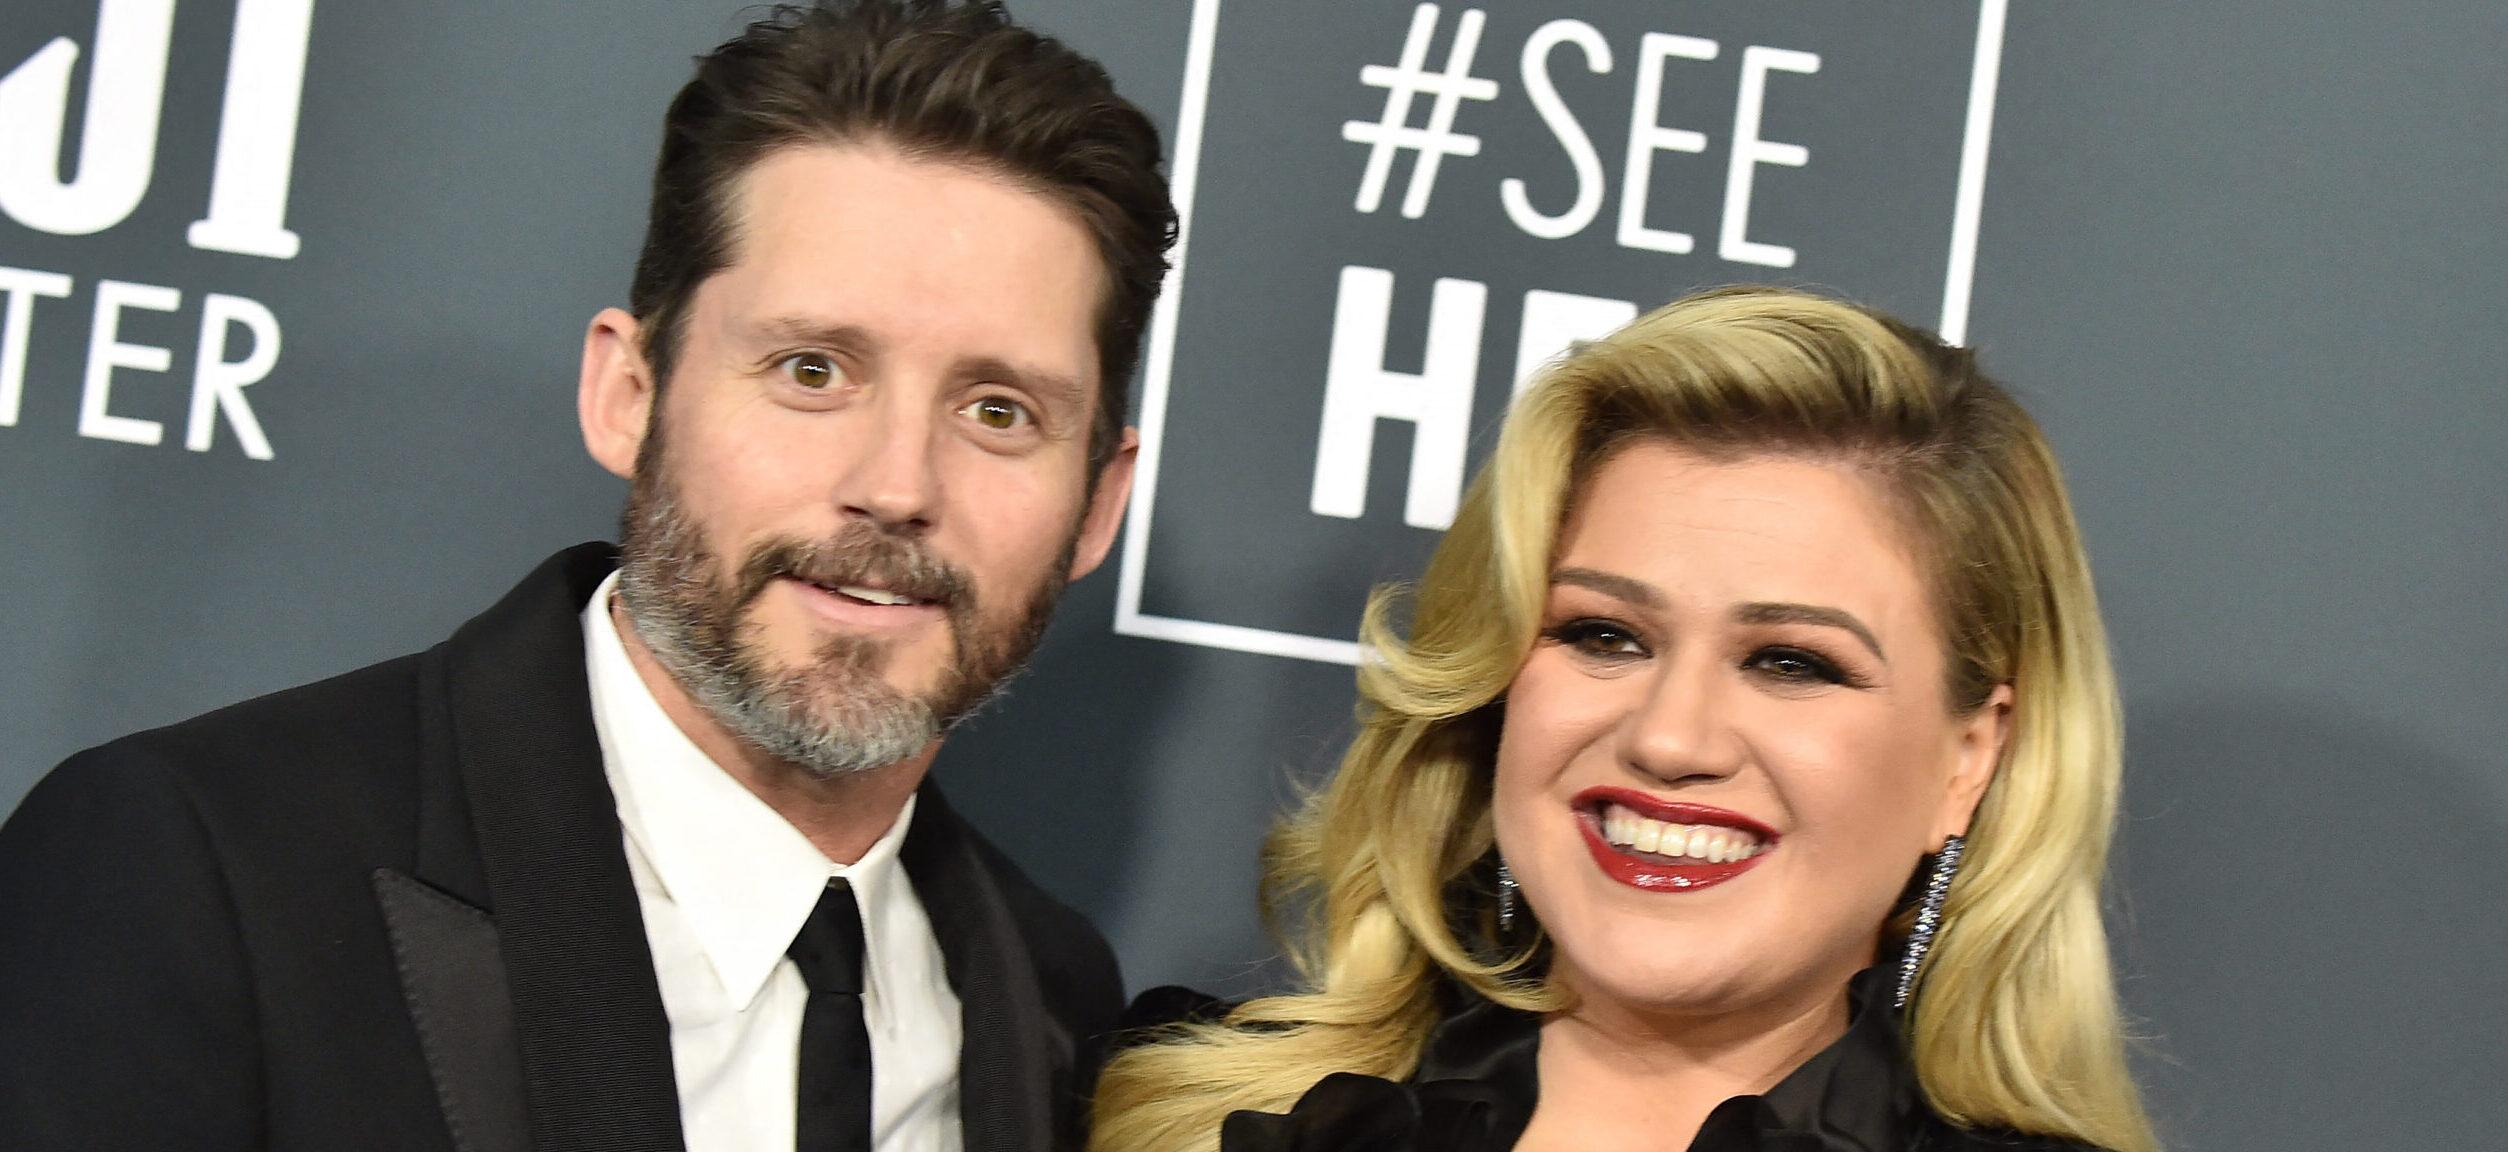 Kelly Clarkson and ex-husband Brandon Blackstock at the 25th Annual Critics' Choice Awards - Arrivals